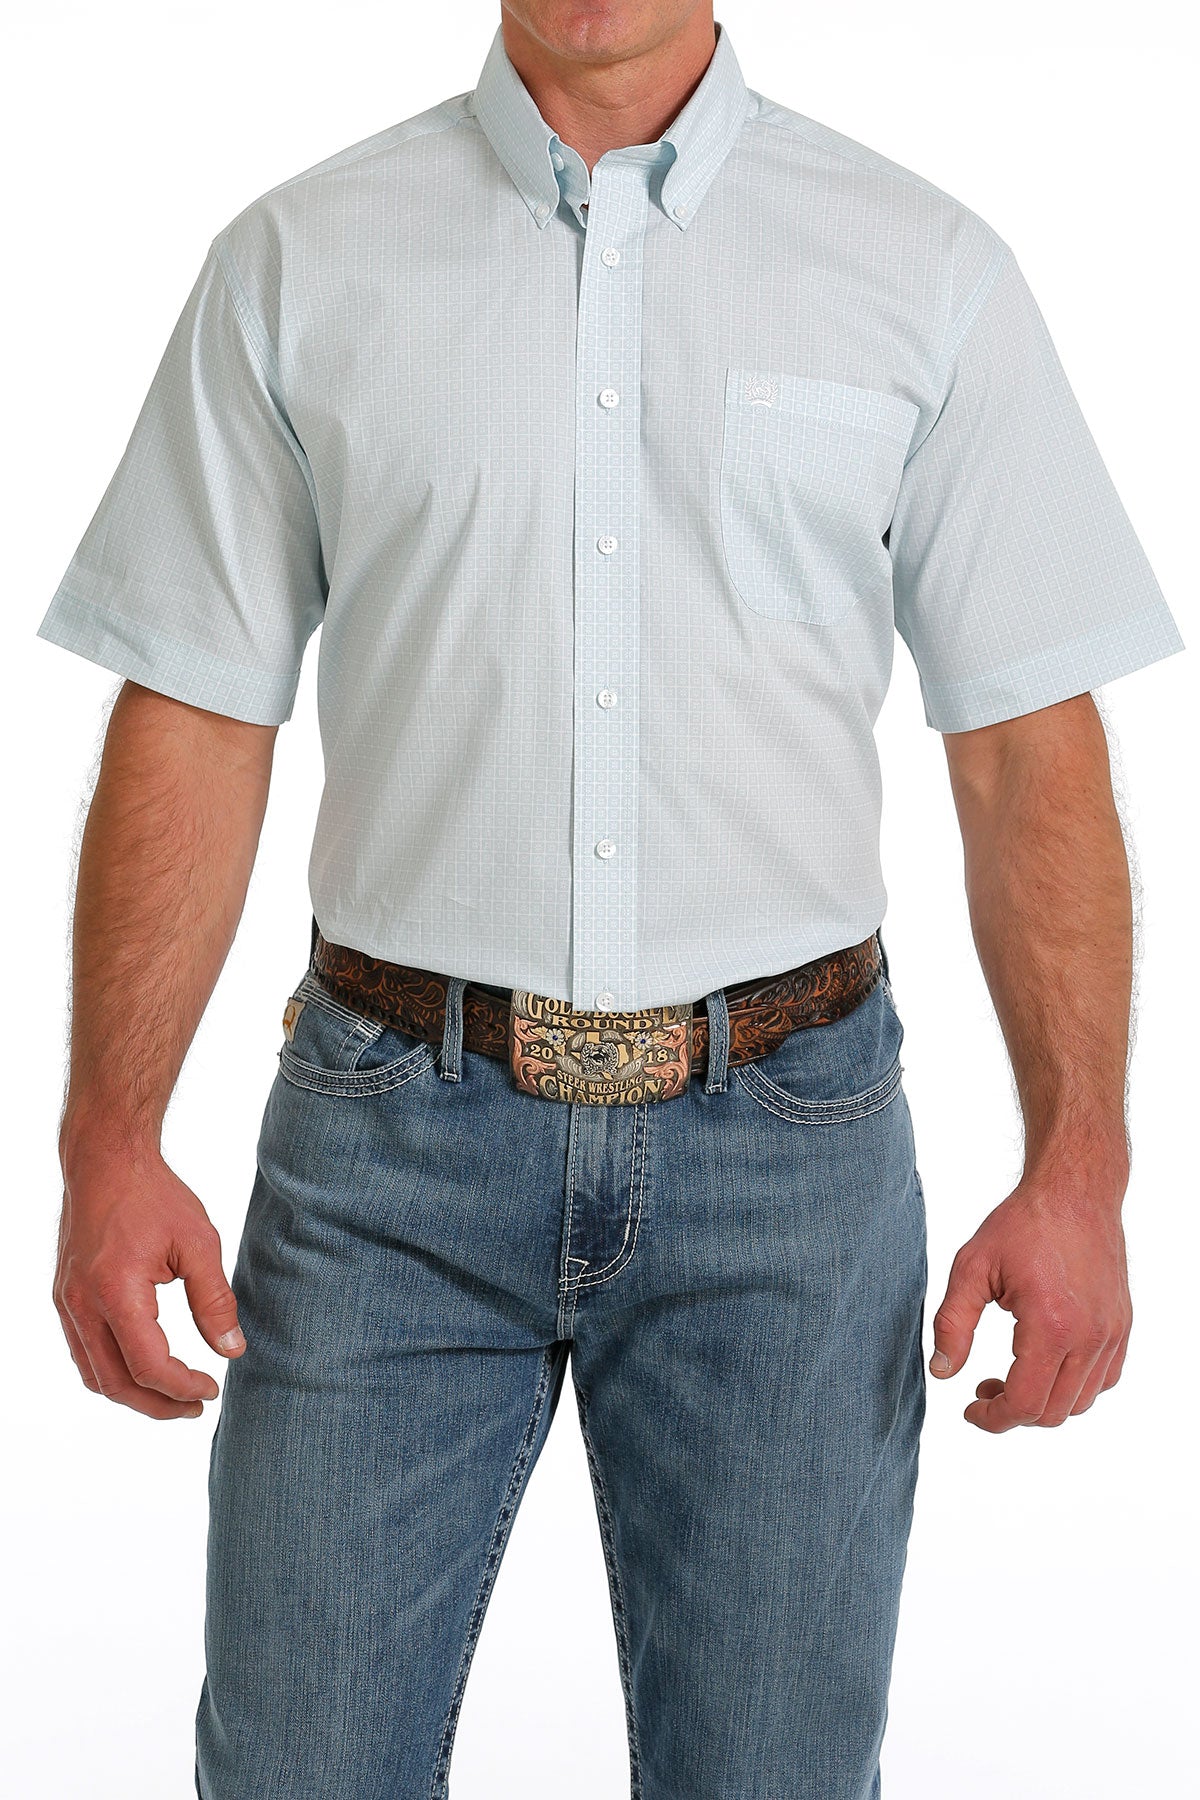 Cinch Men's Light Blue Geometric S/S Western Button Down Shirt ...